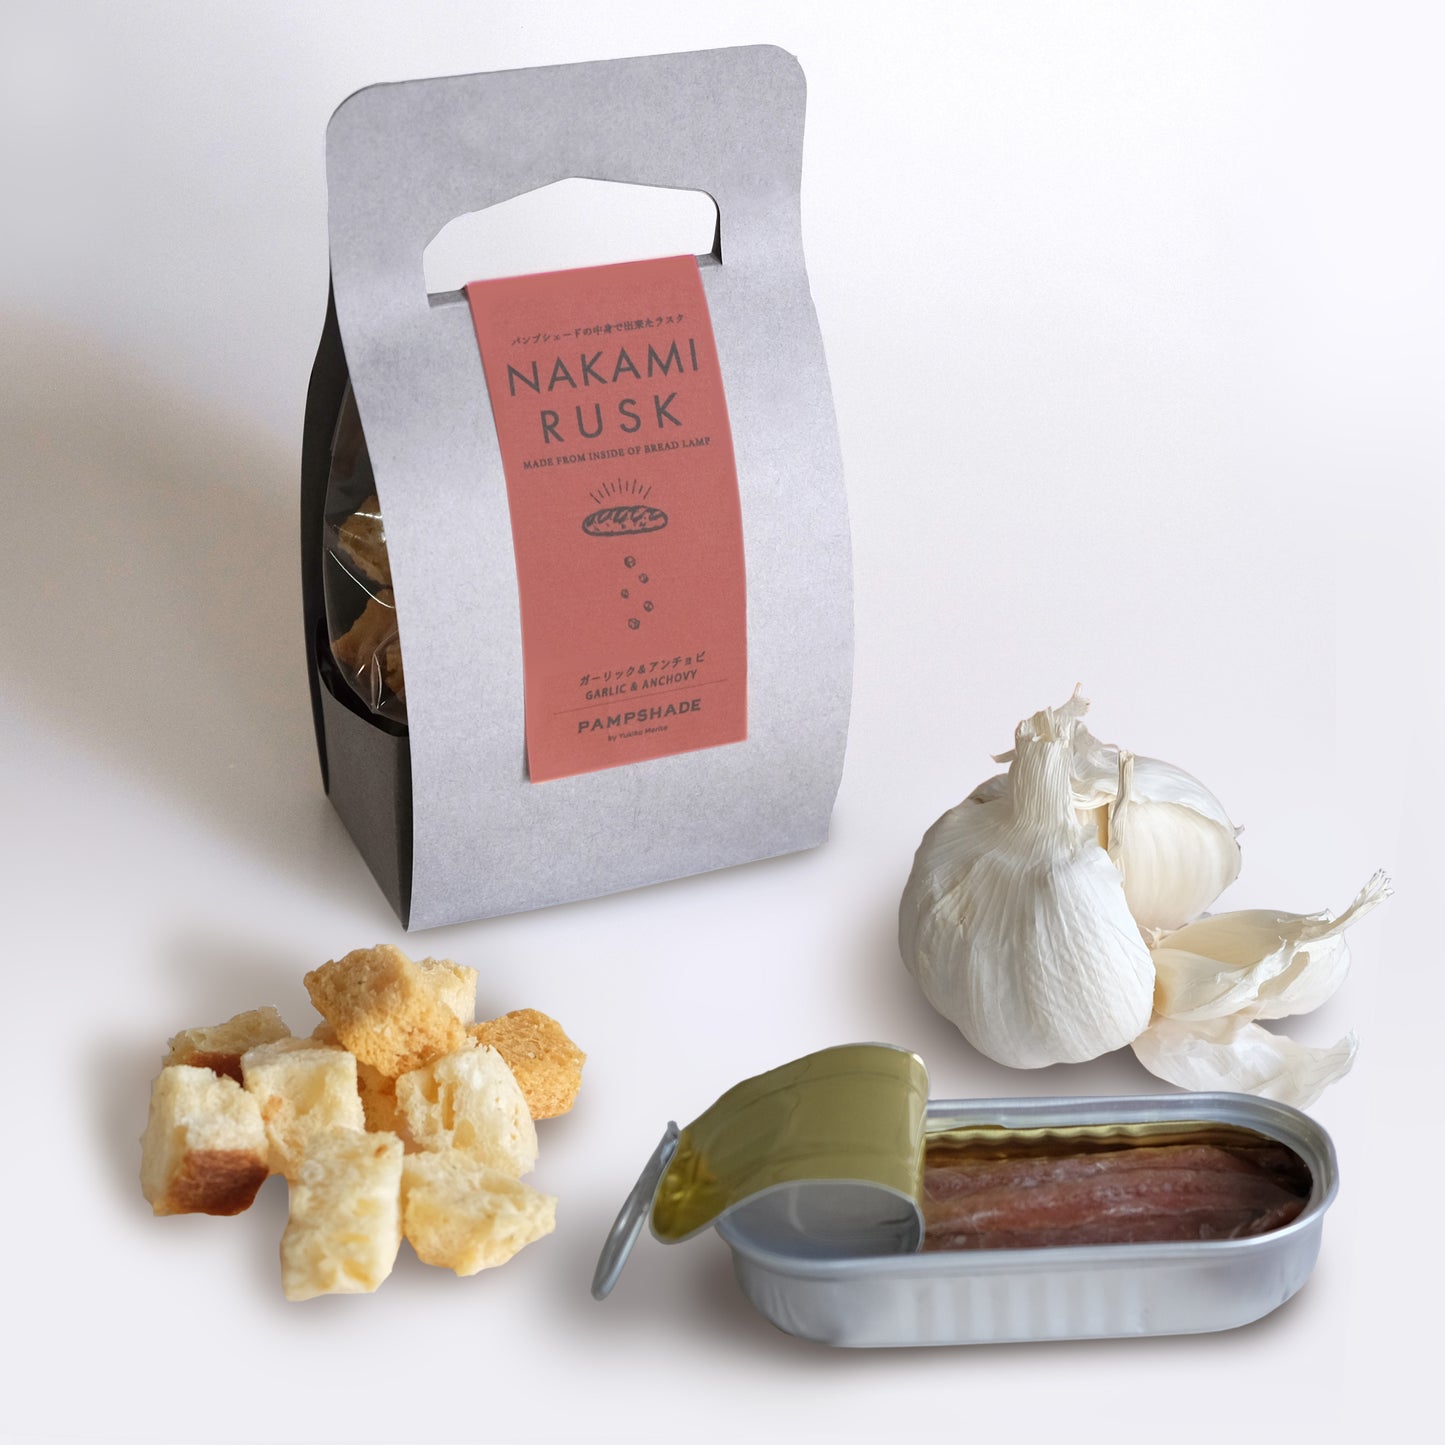 Nakami Rusk - Made from Inside of Bread Lamp! Garlic & Anchovy